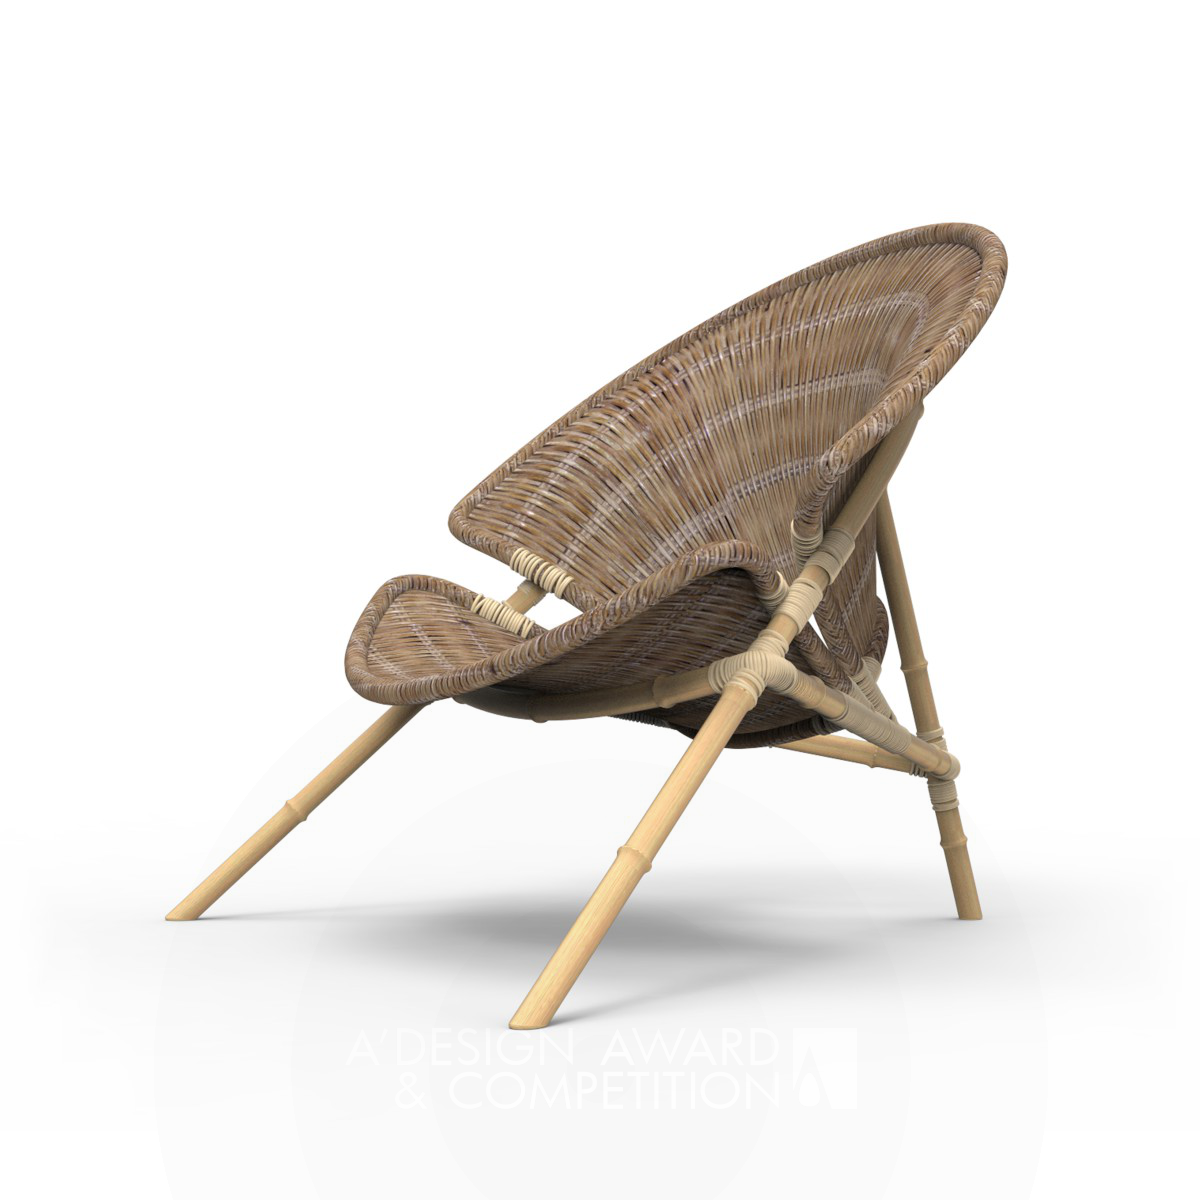 Bamboo Leisure Chair